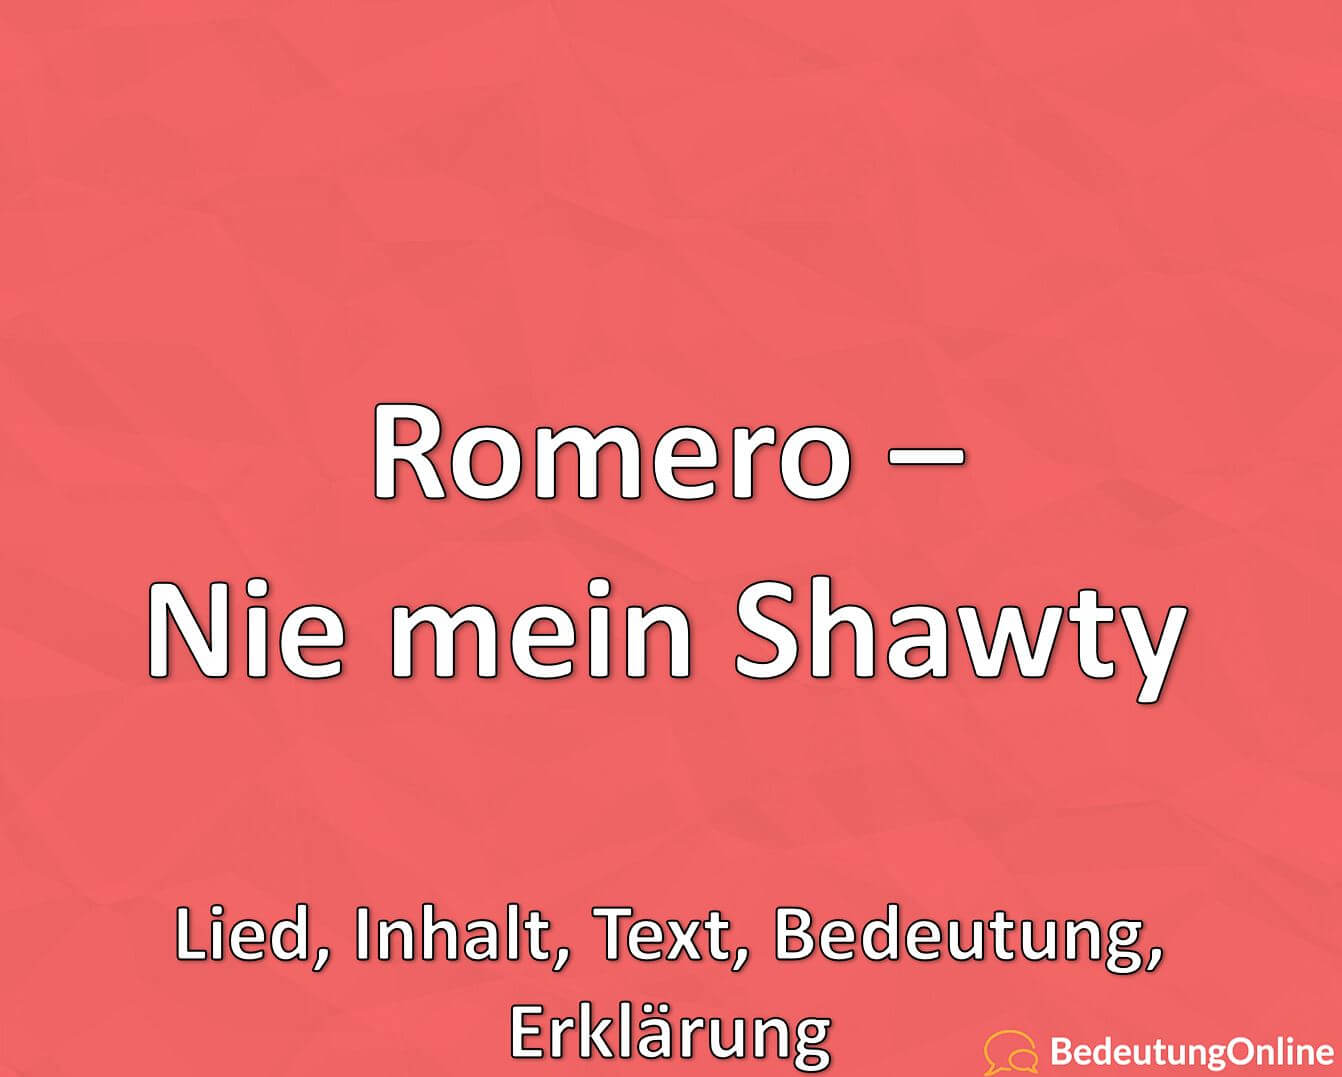 Romero's 'Nie Mein Shawty' sample of Gotye feat. Kimbra's 'Somebody That I  Used to Know